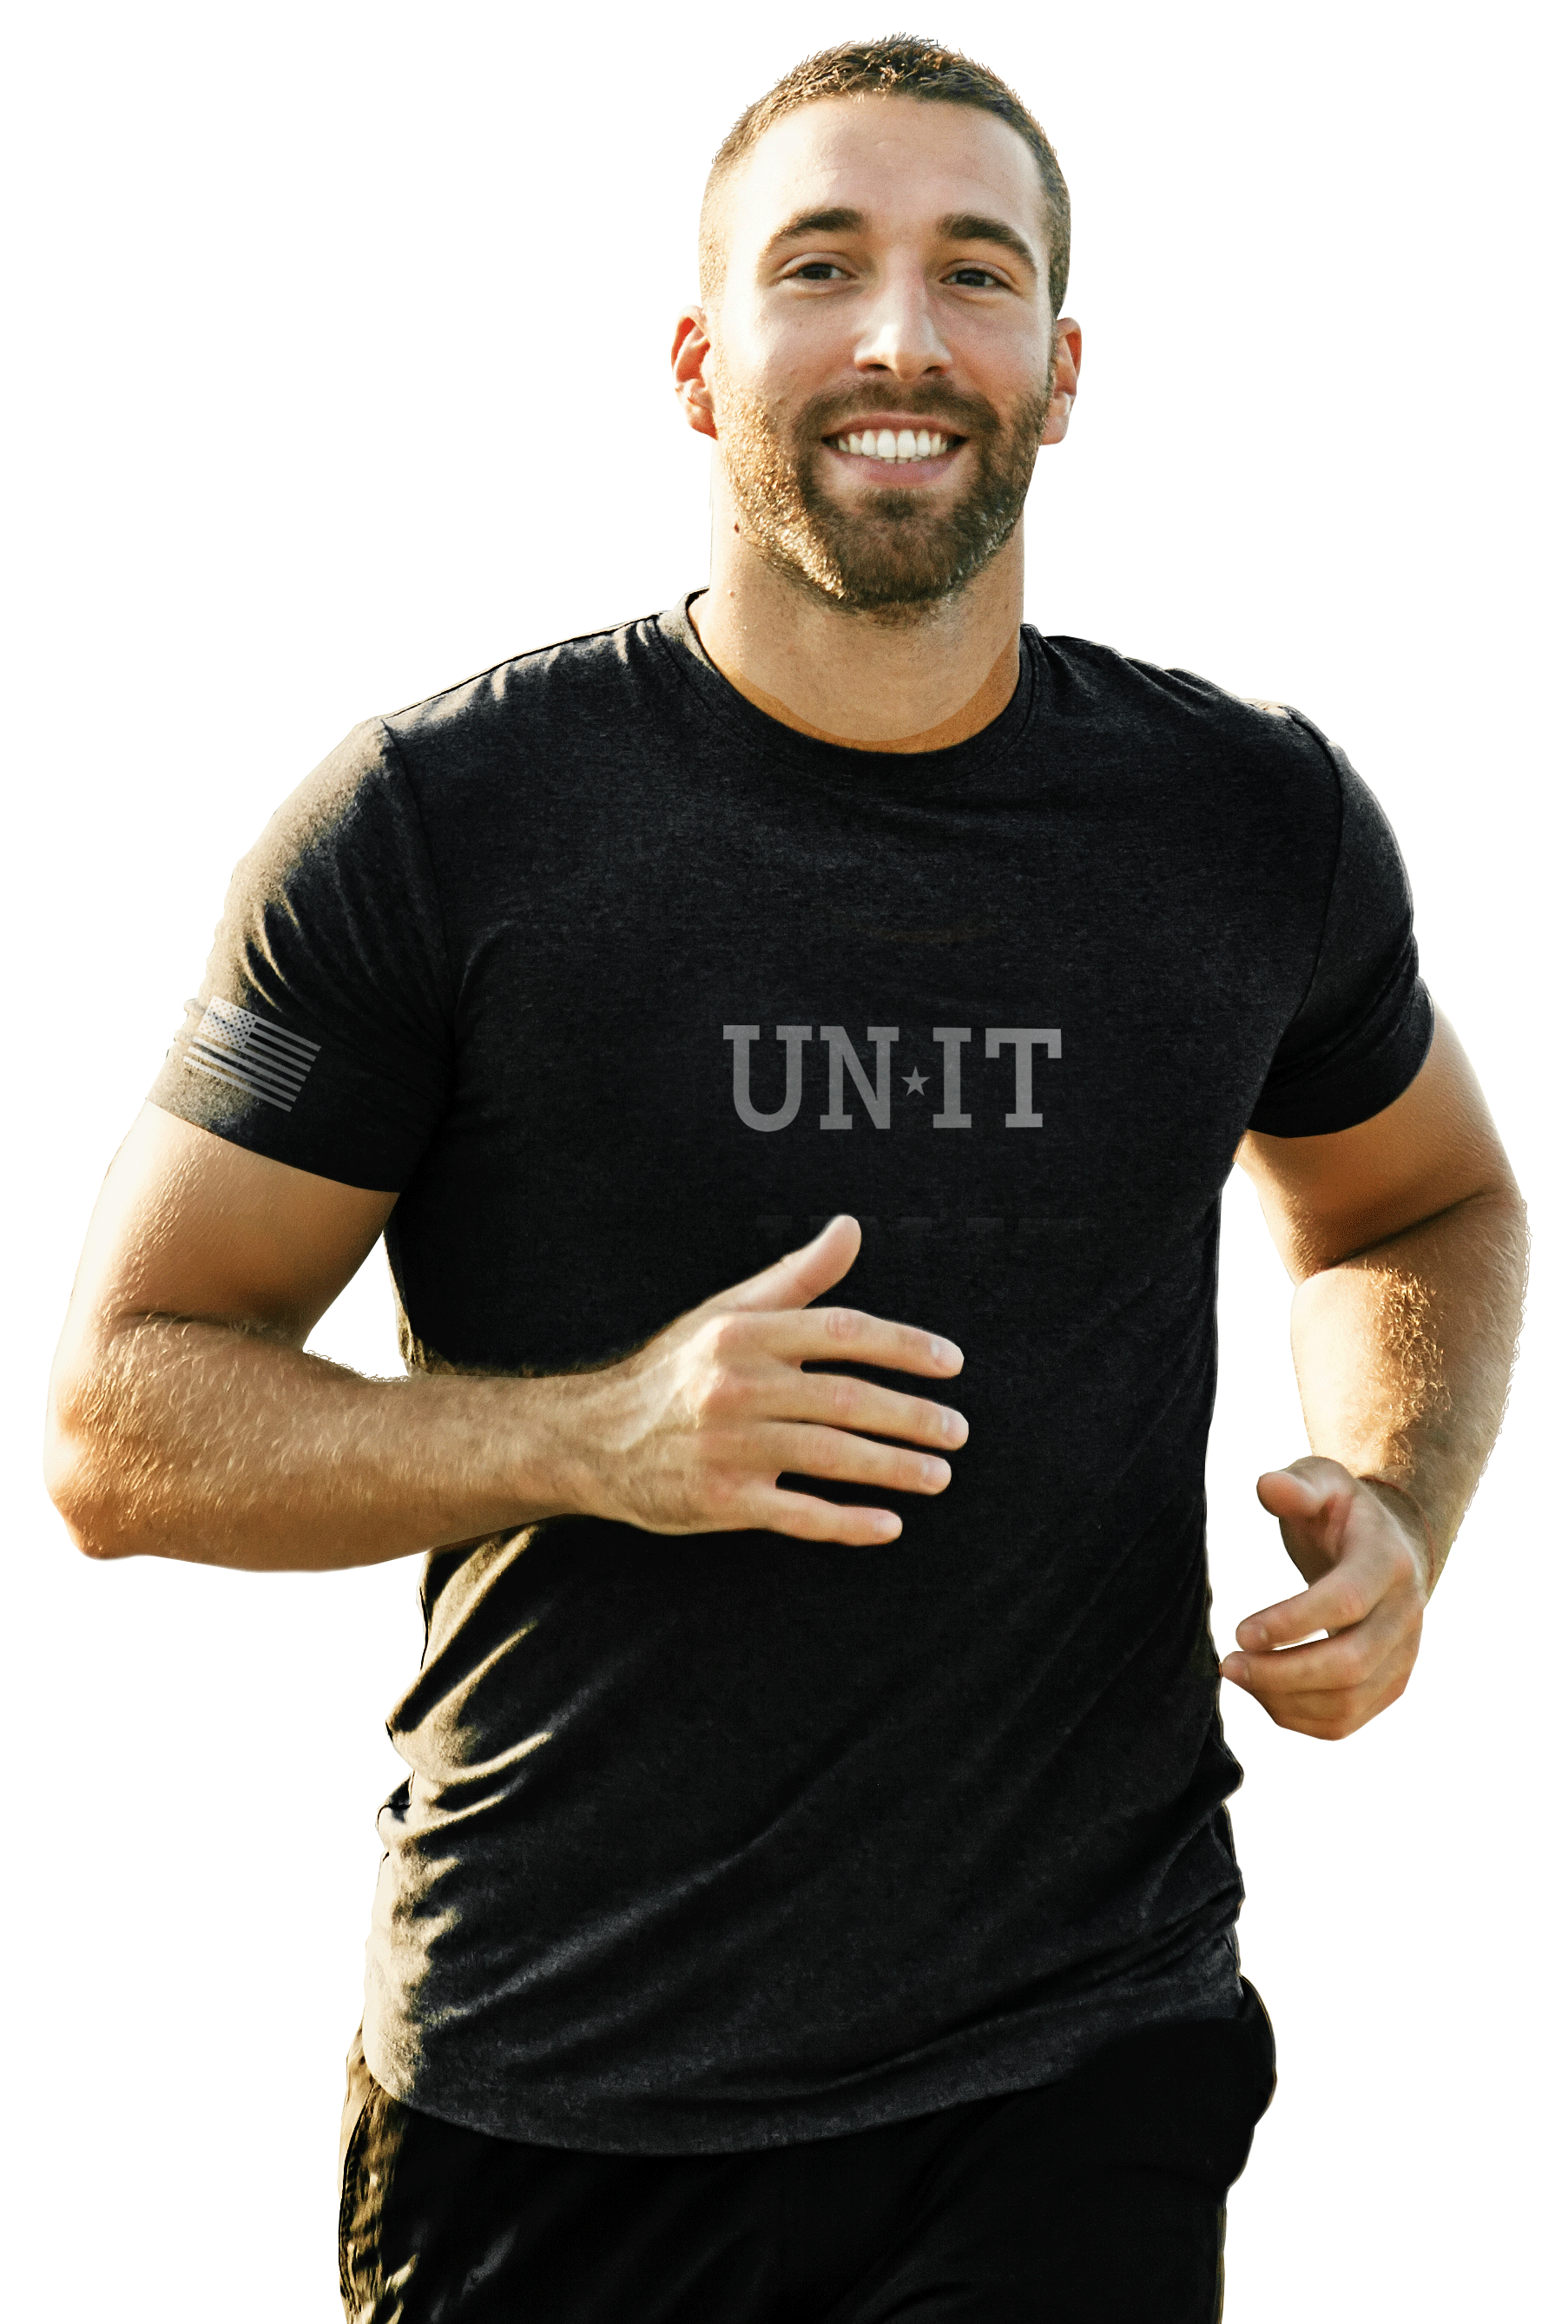 Guy running wearing a UNIT t-shirt